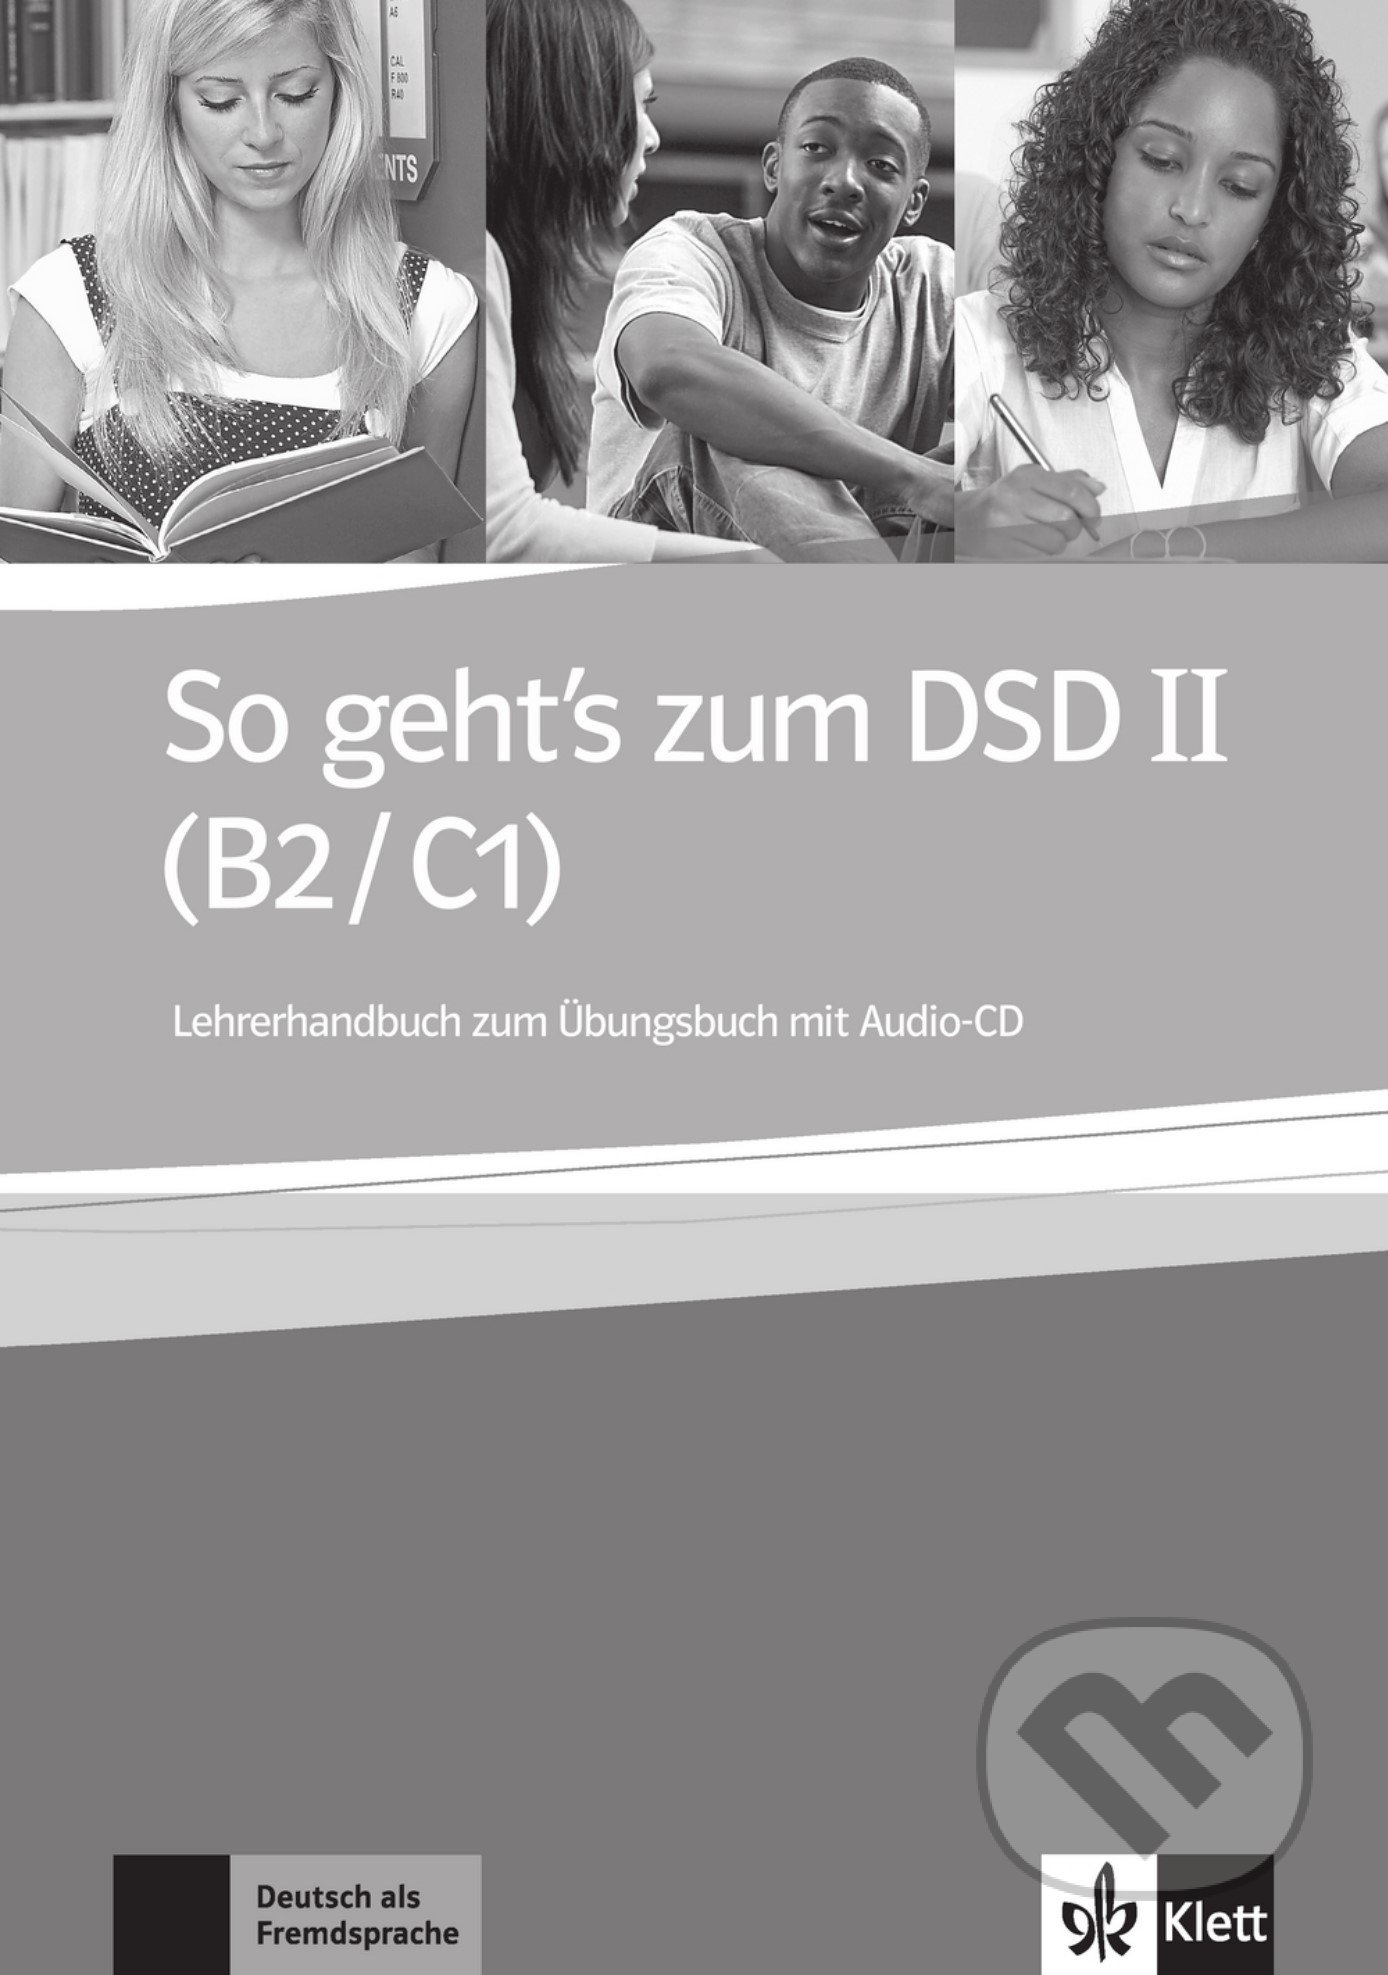 So geht’s zum DSD - Metodická příručka + CD, Klett, 2011